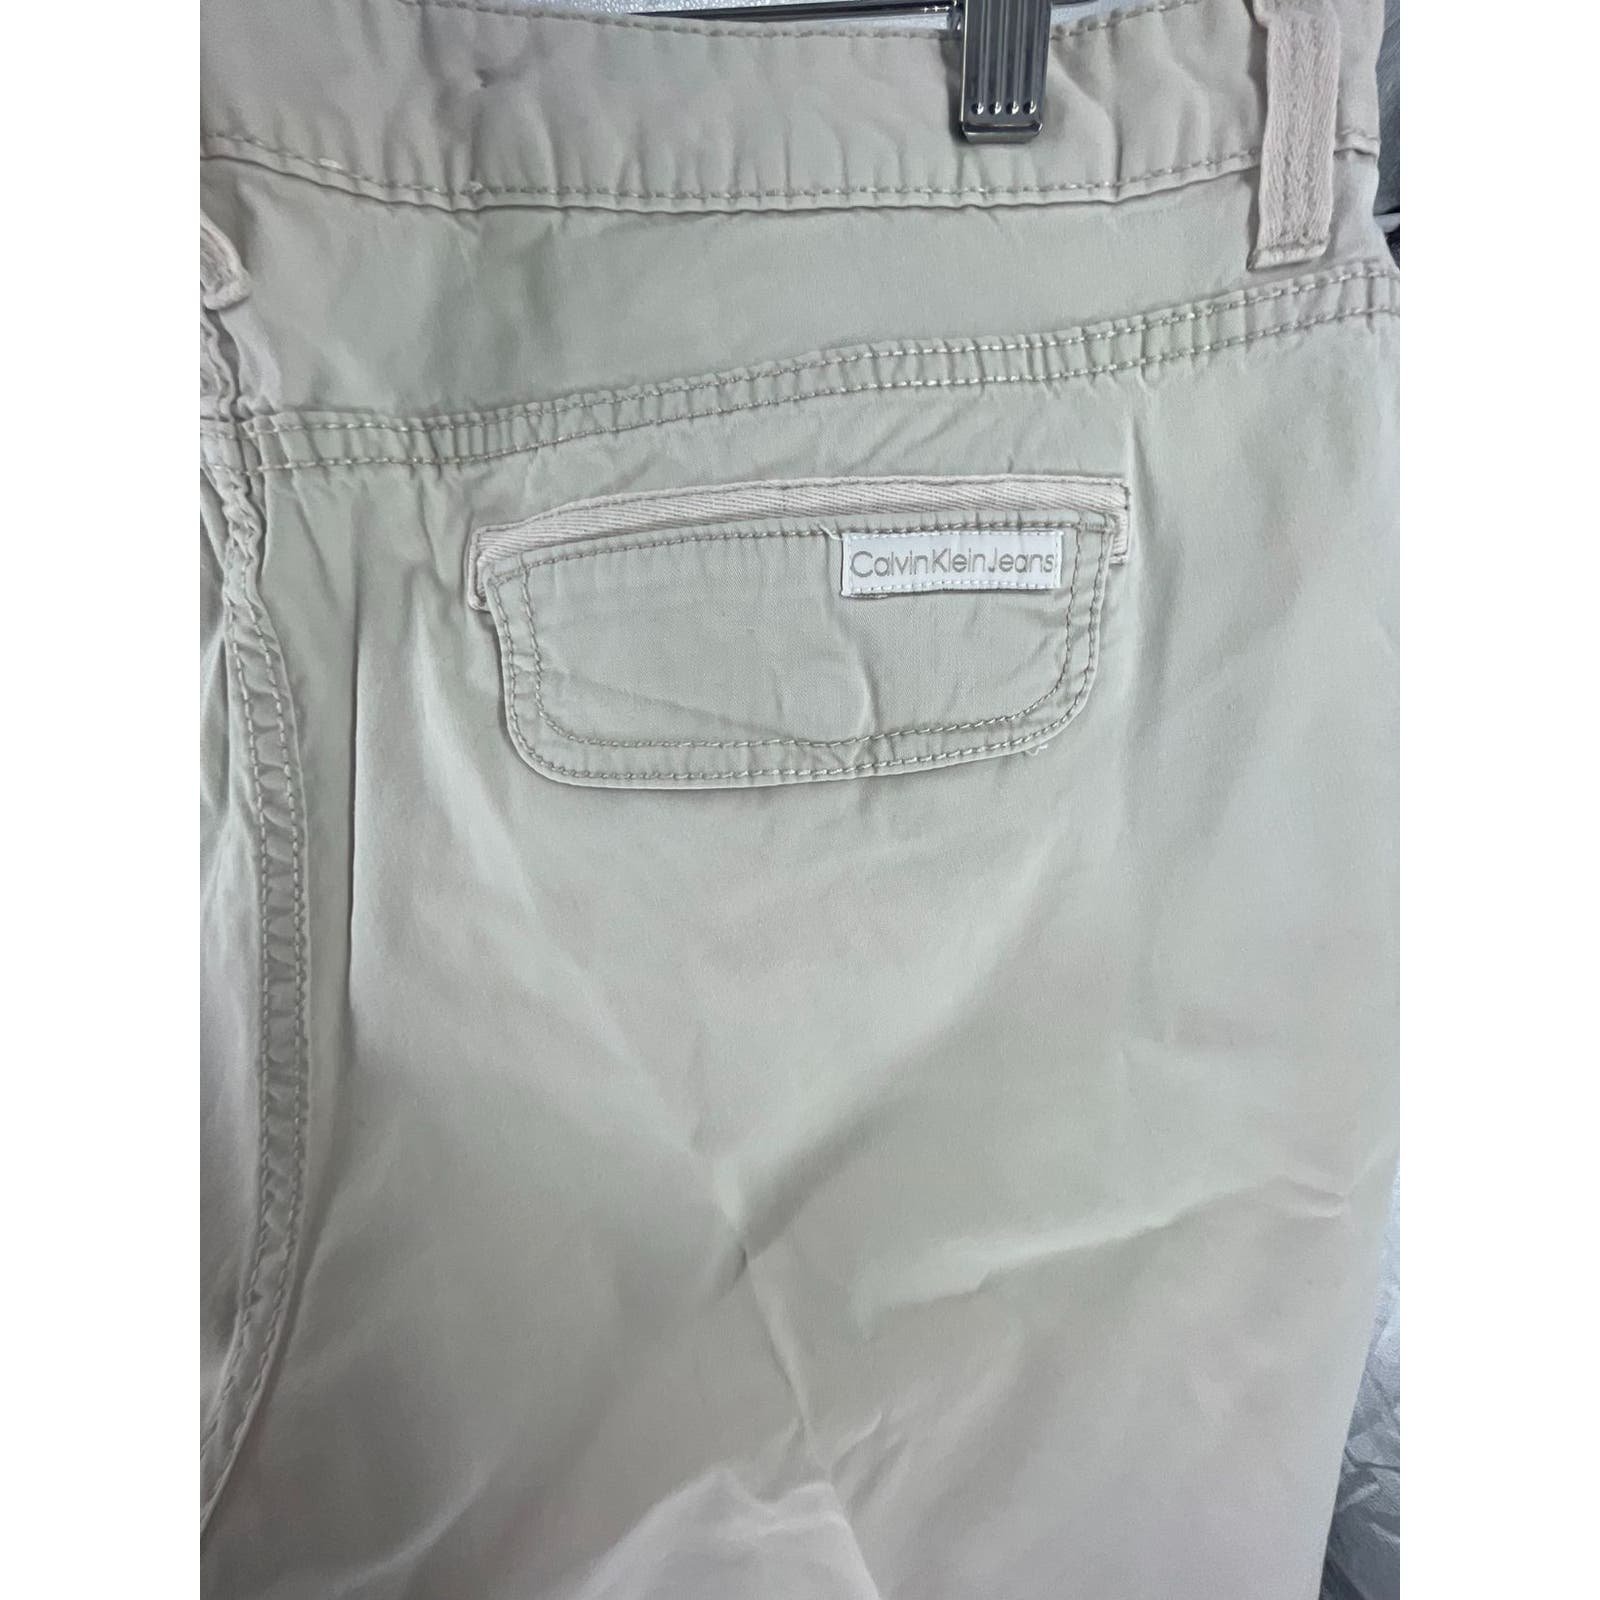 big discount Calvin Klein Jeans Beige Khaki Chino Bermuda Shorts Women´s Size 14 N9sC4Ilte no tax